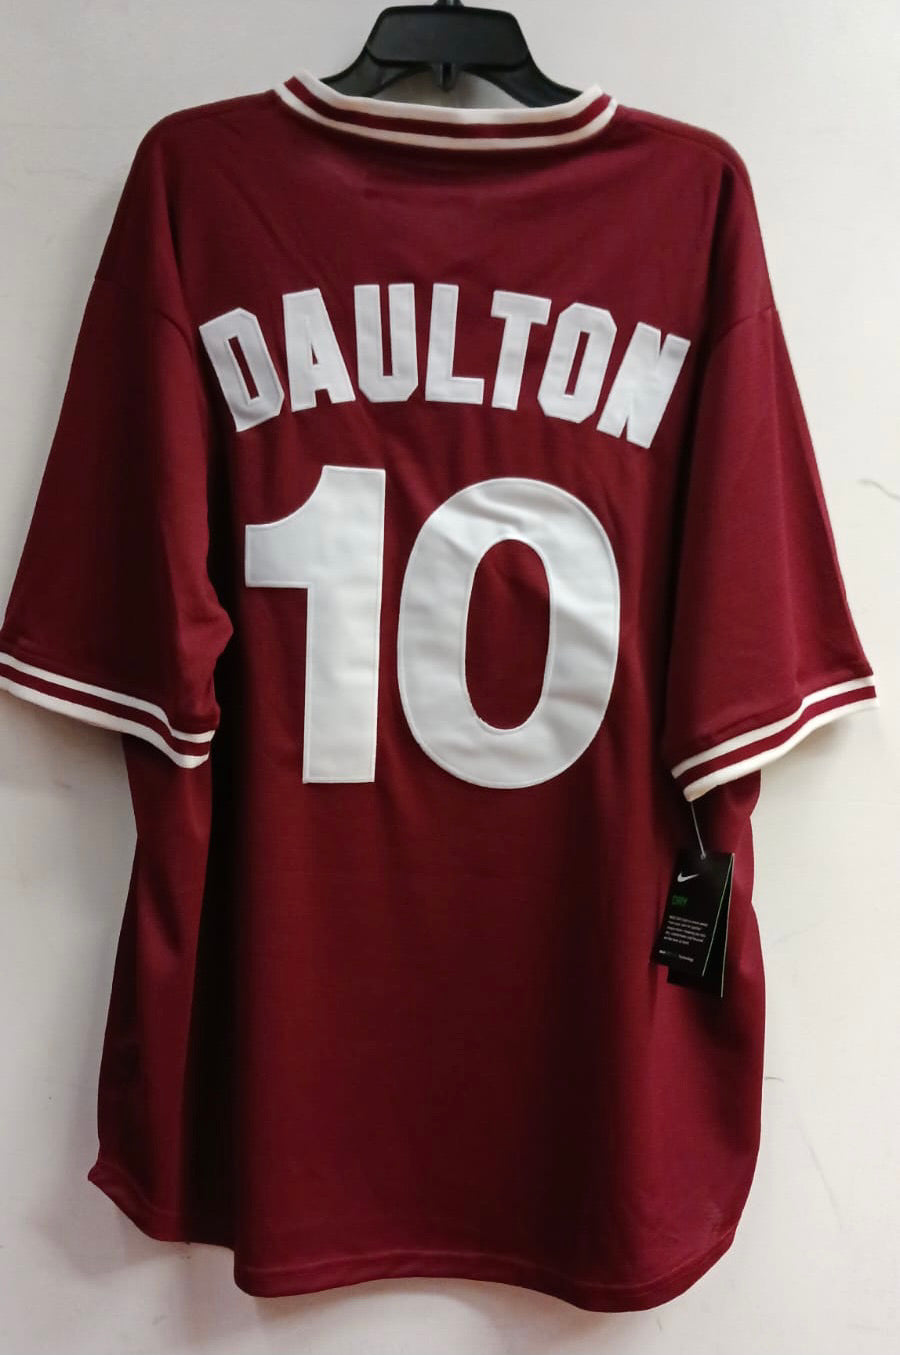 darren daulton jersey number